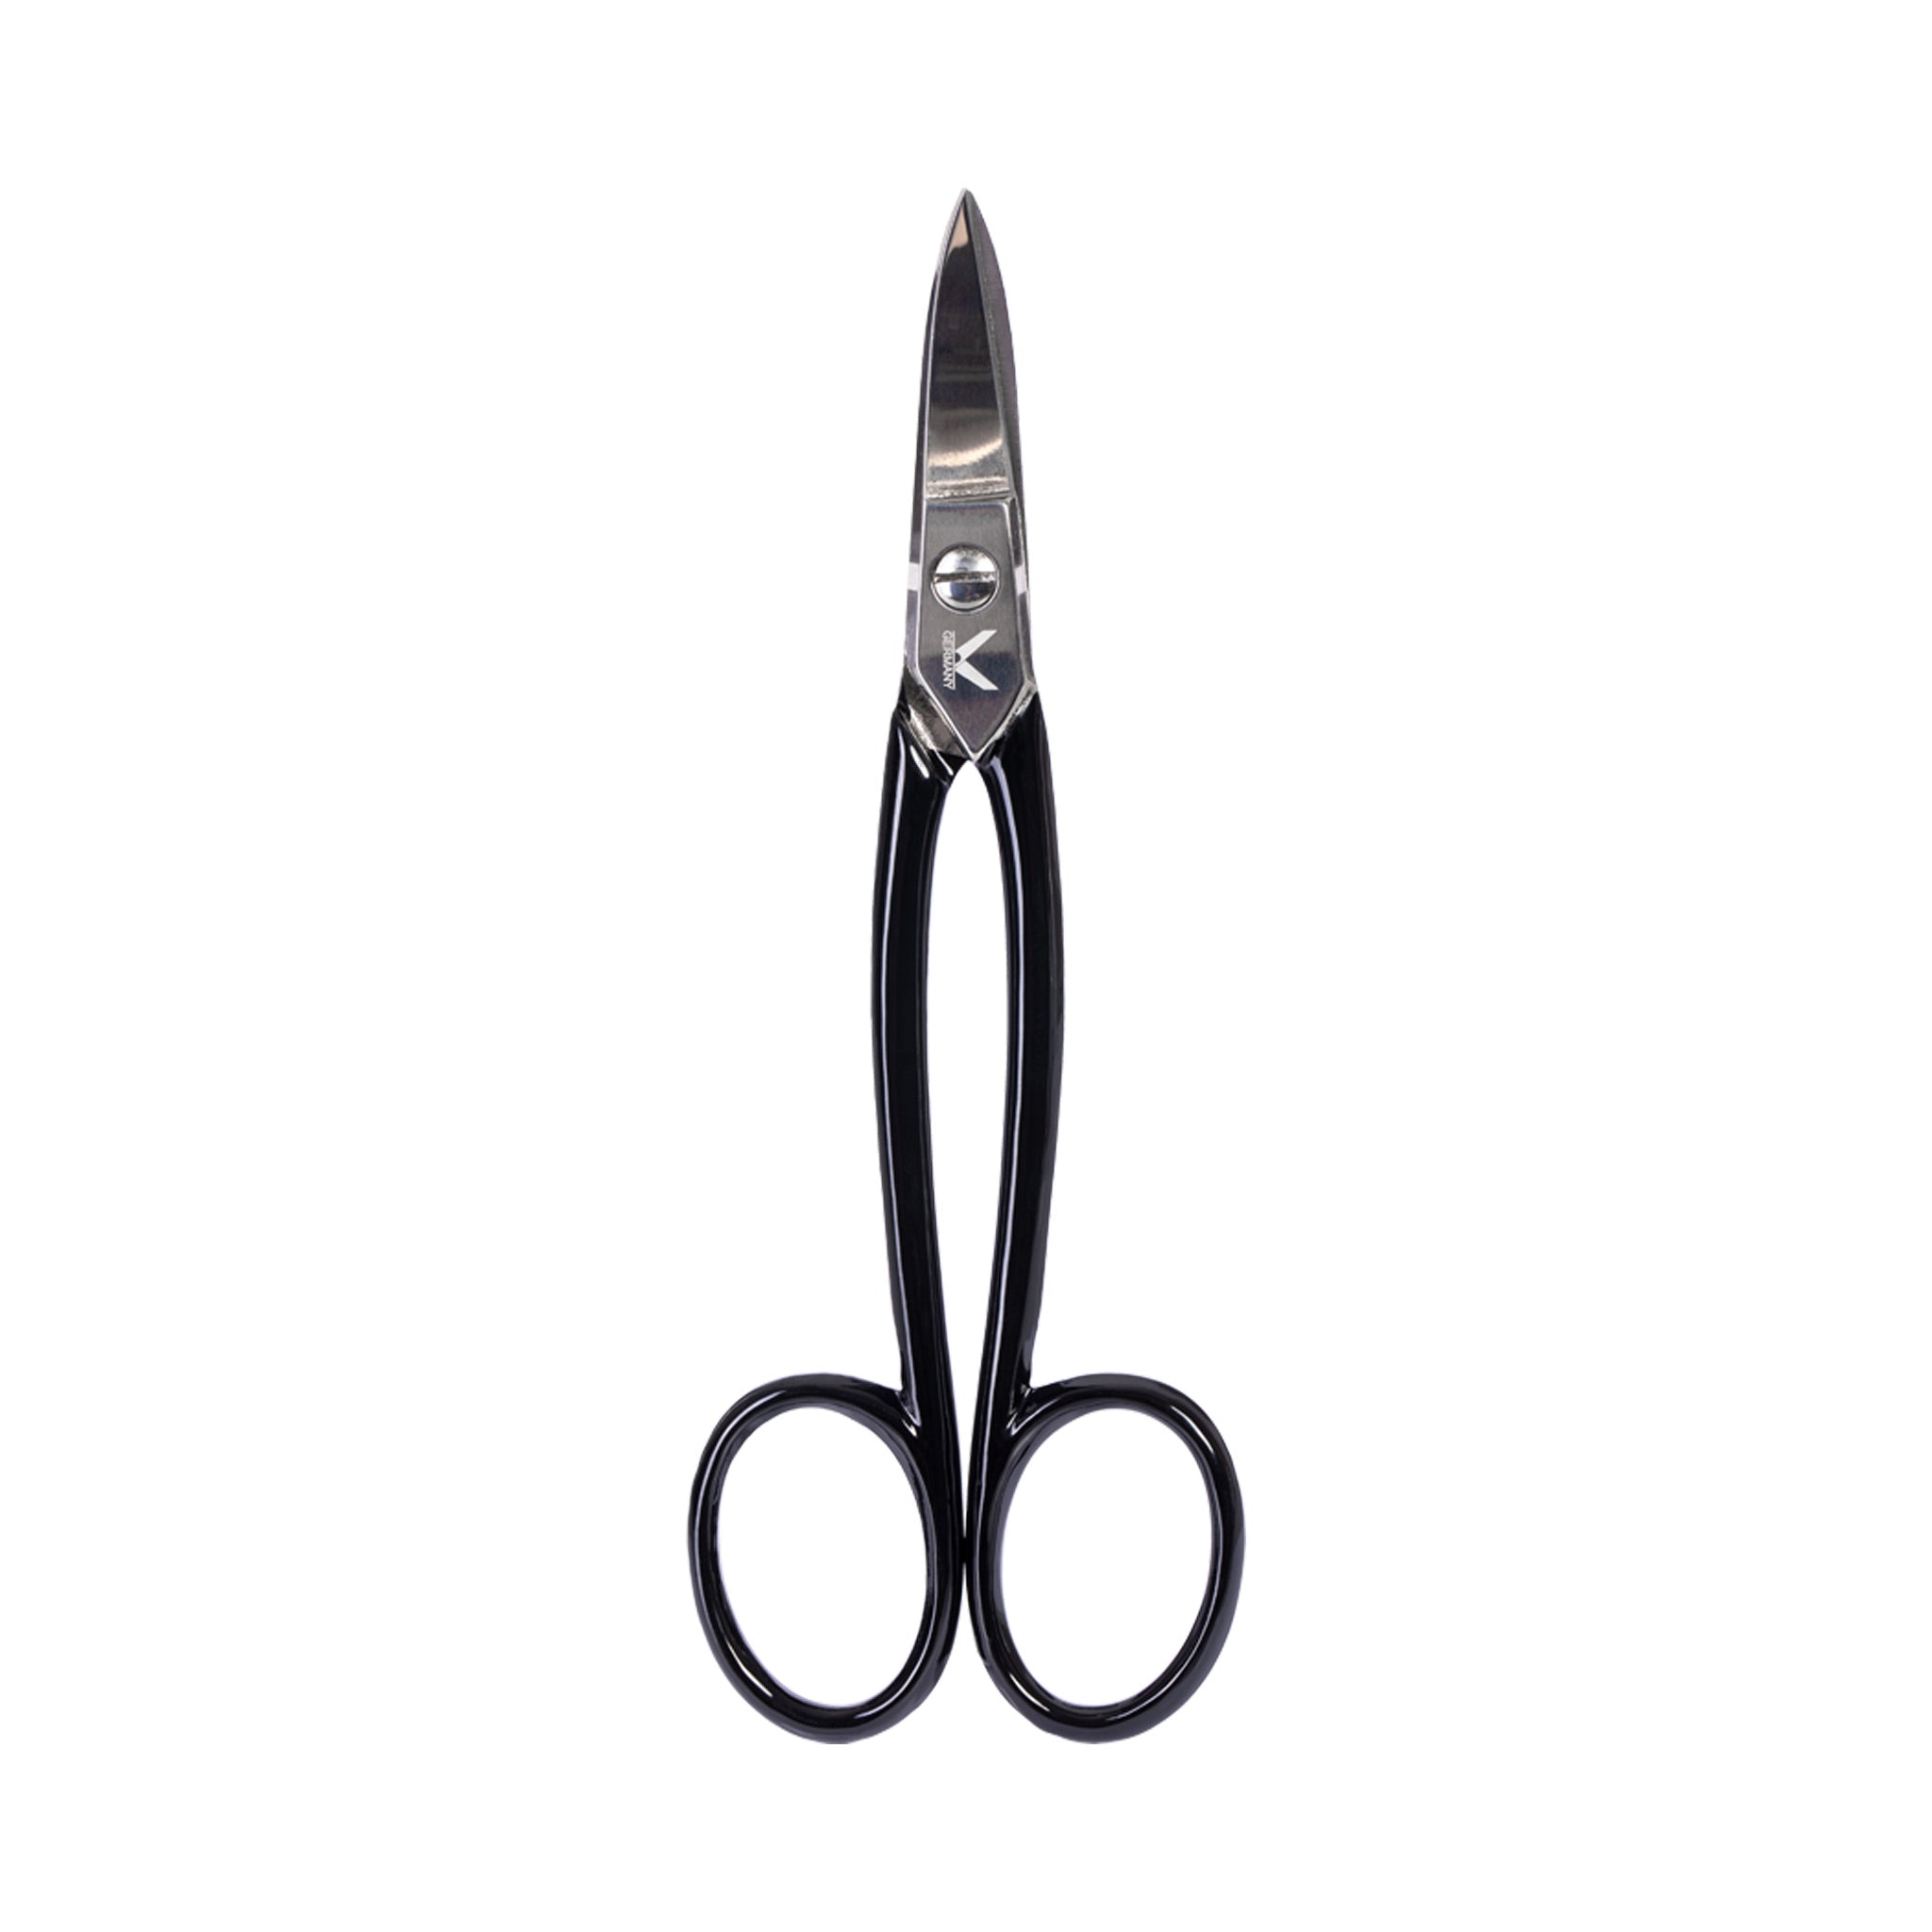 Foil scissors serrated